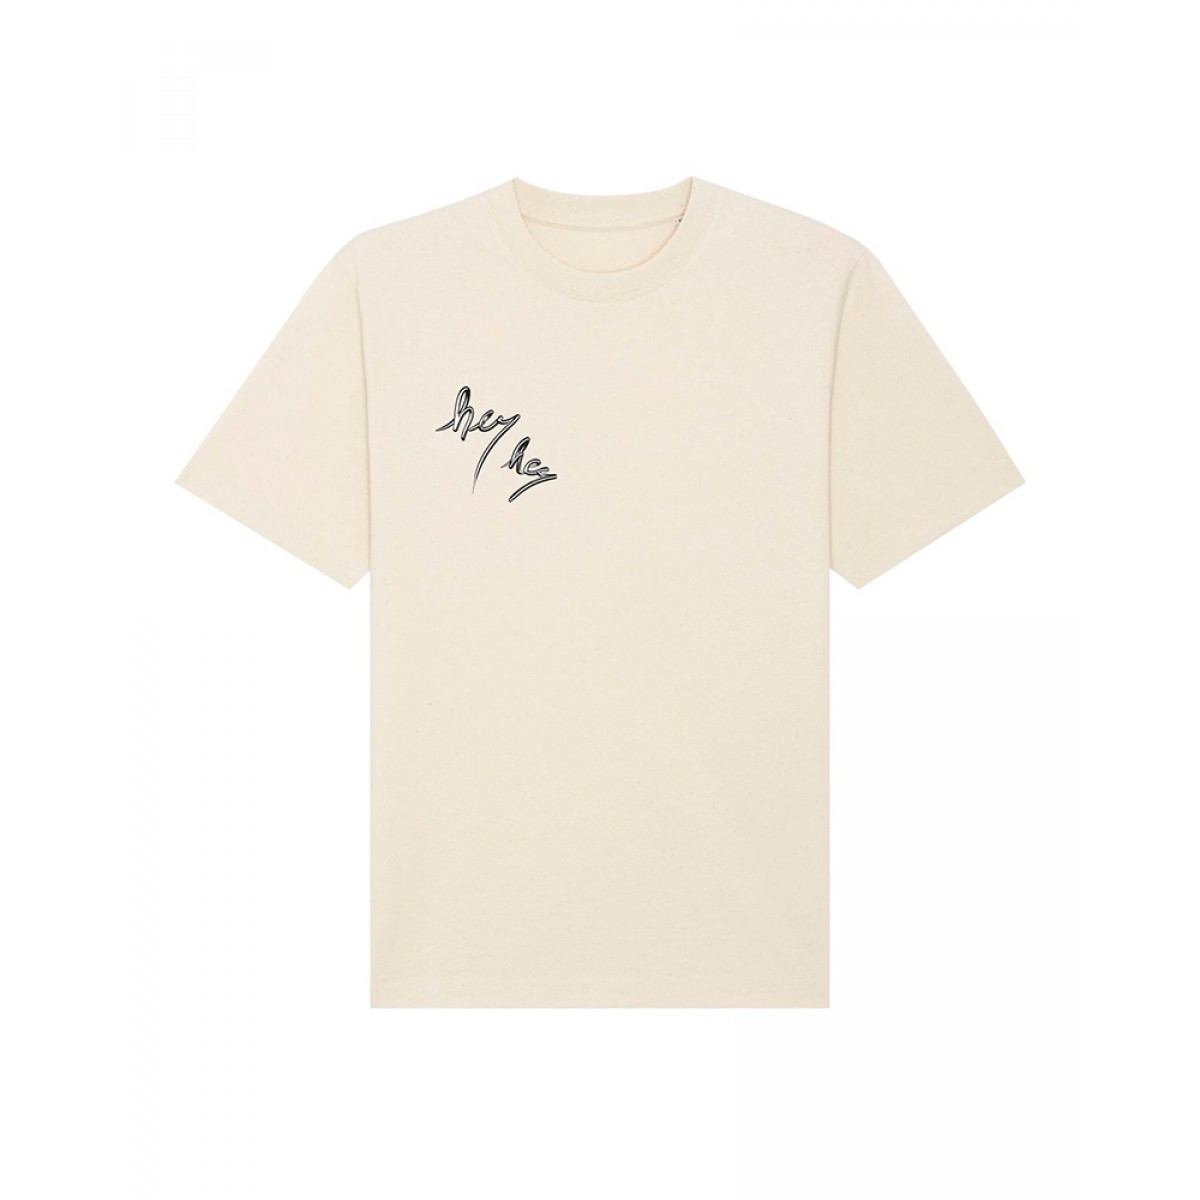 hey hey x seebelieveproduce T-Shirt (Limited Edition)